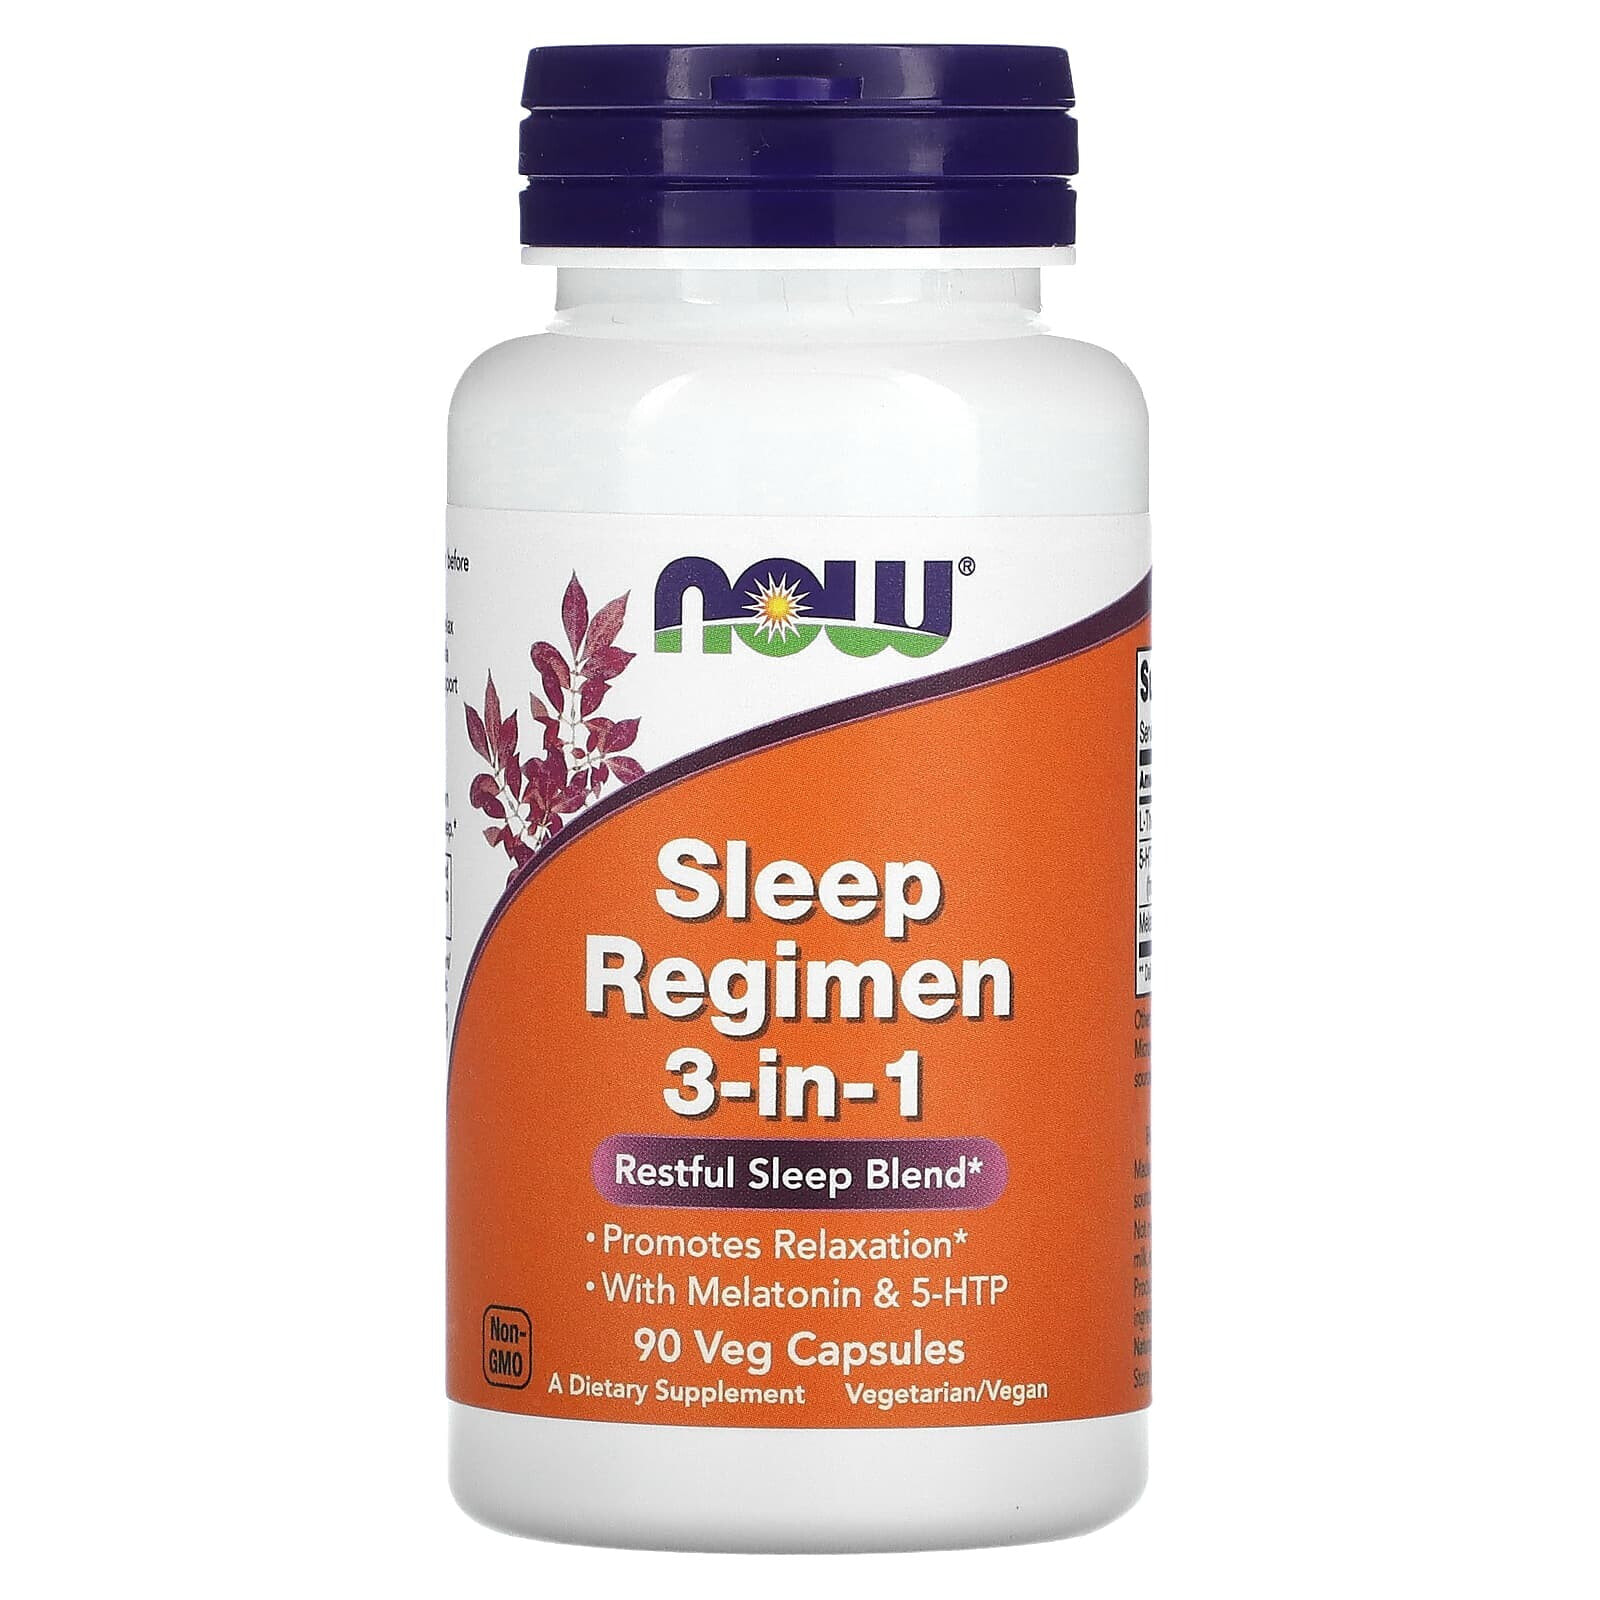 Sleep Regimen 3-in-1, 90 Veg Capsules